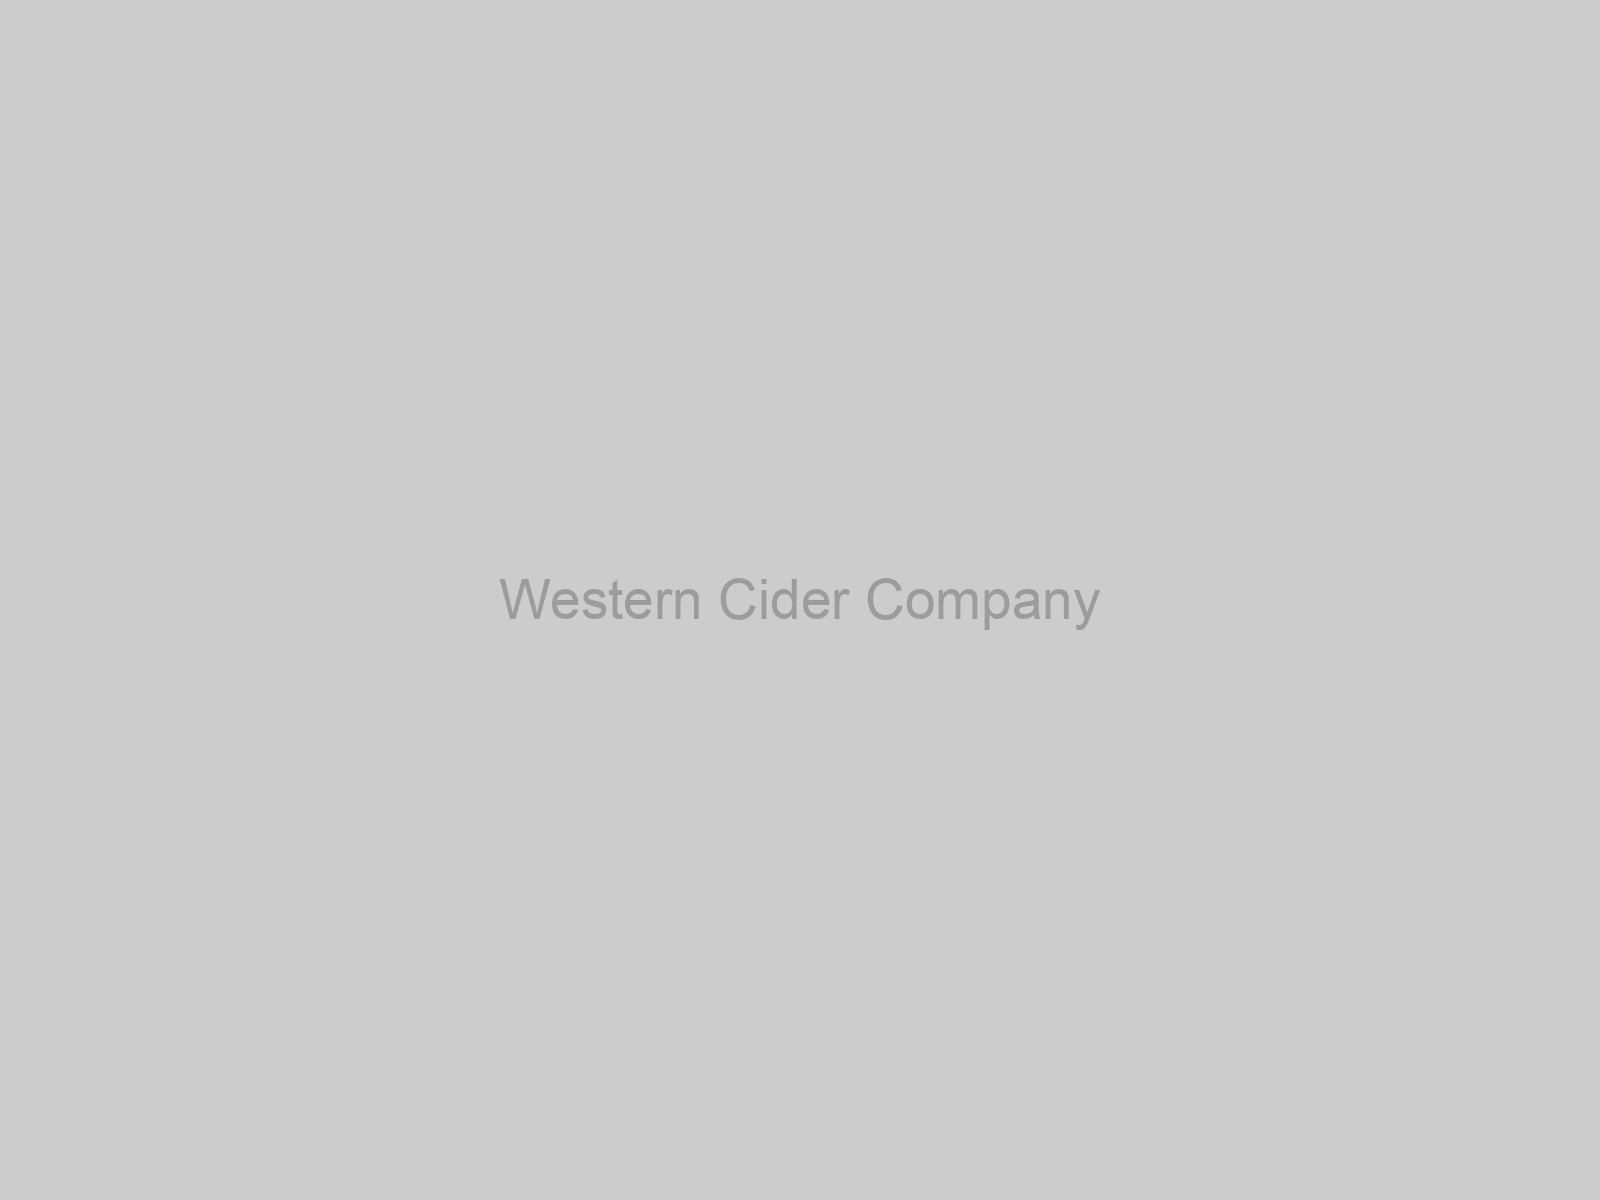 Western Cider Company